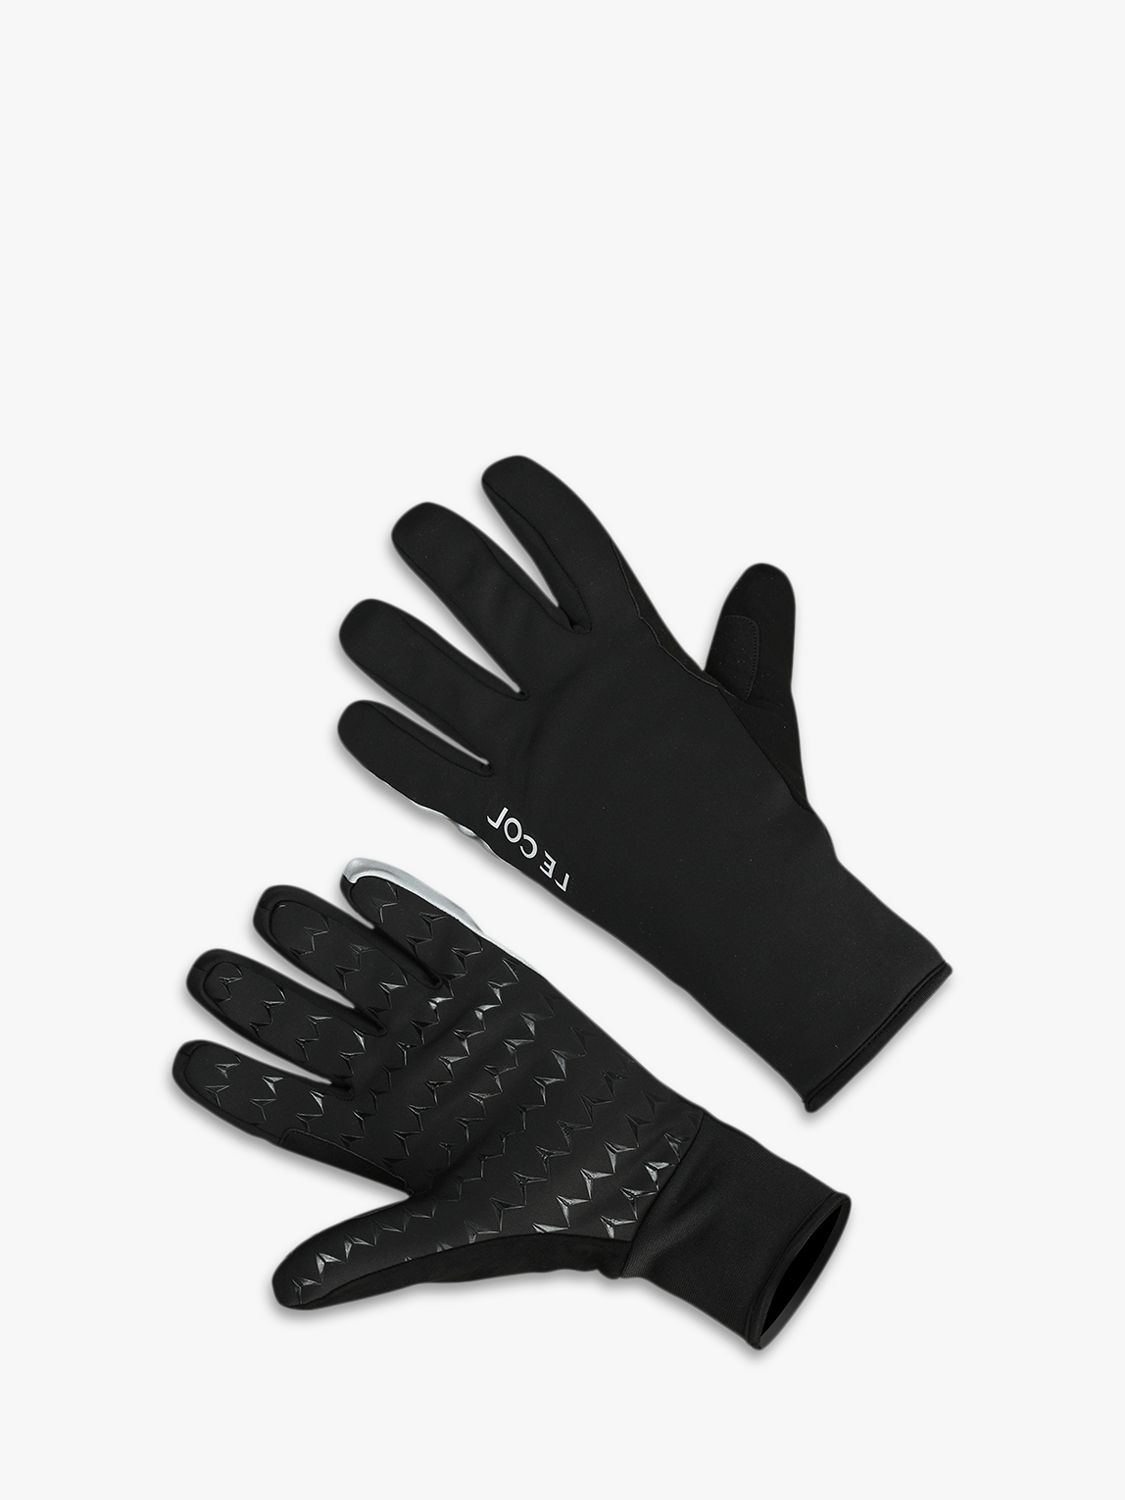 Le Col Hors Categorie Deep Winter Gloves, Black, S